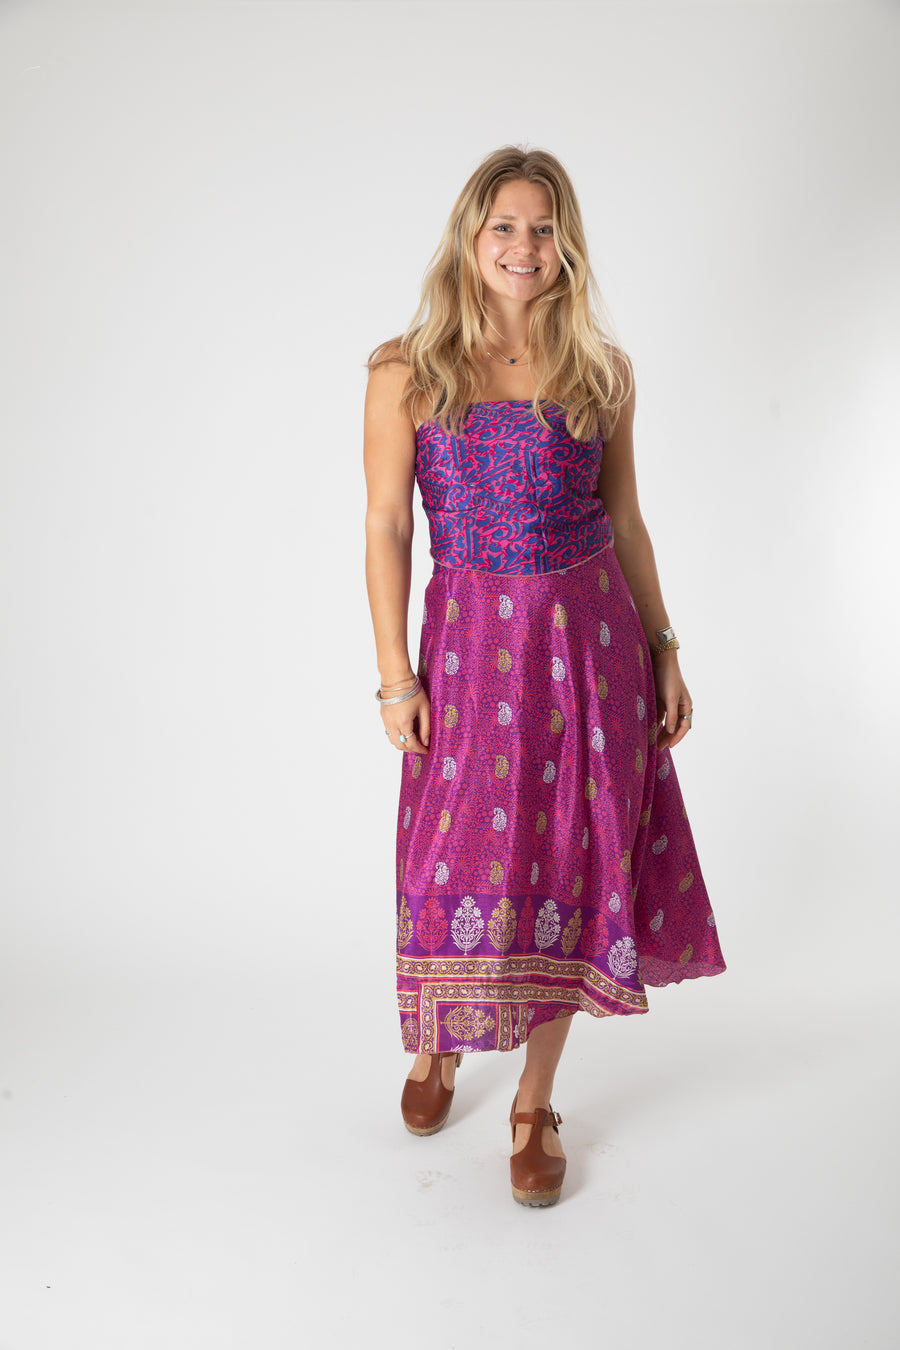 Beautiful blonde hippie girl wearing a recycled silk magic skirt as a boho hippie style silk wrap dress